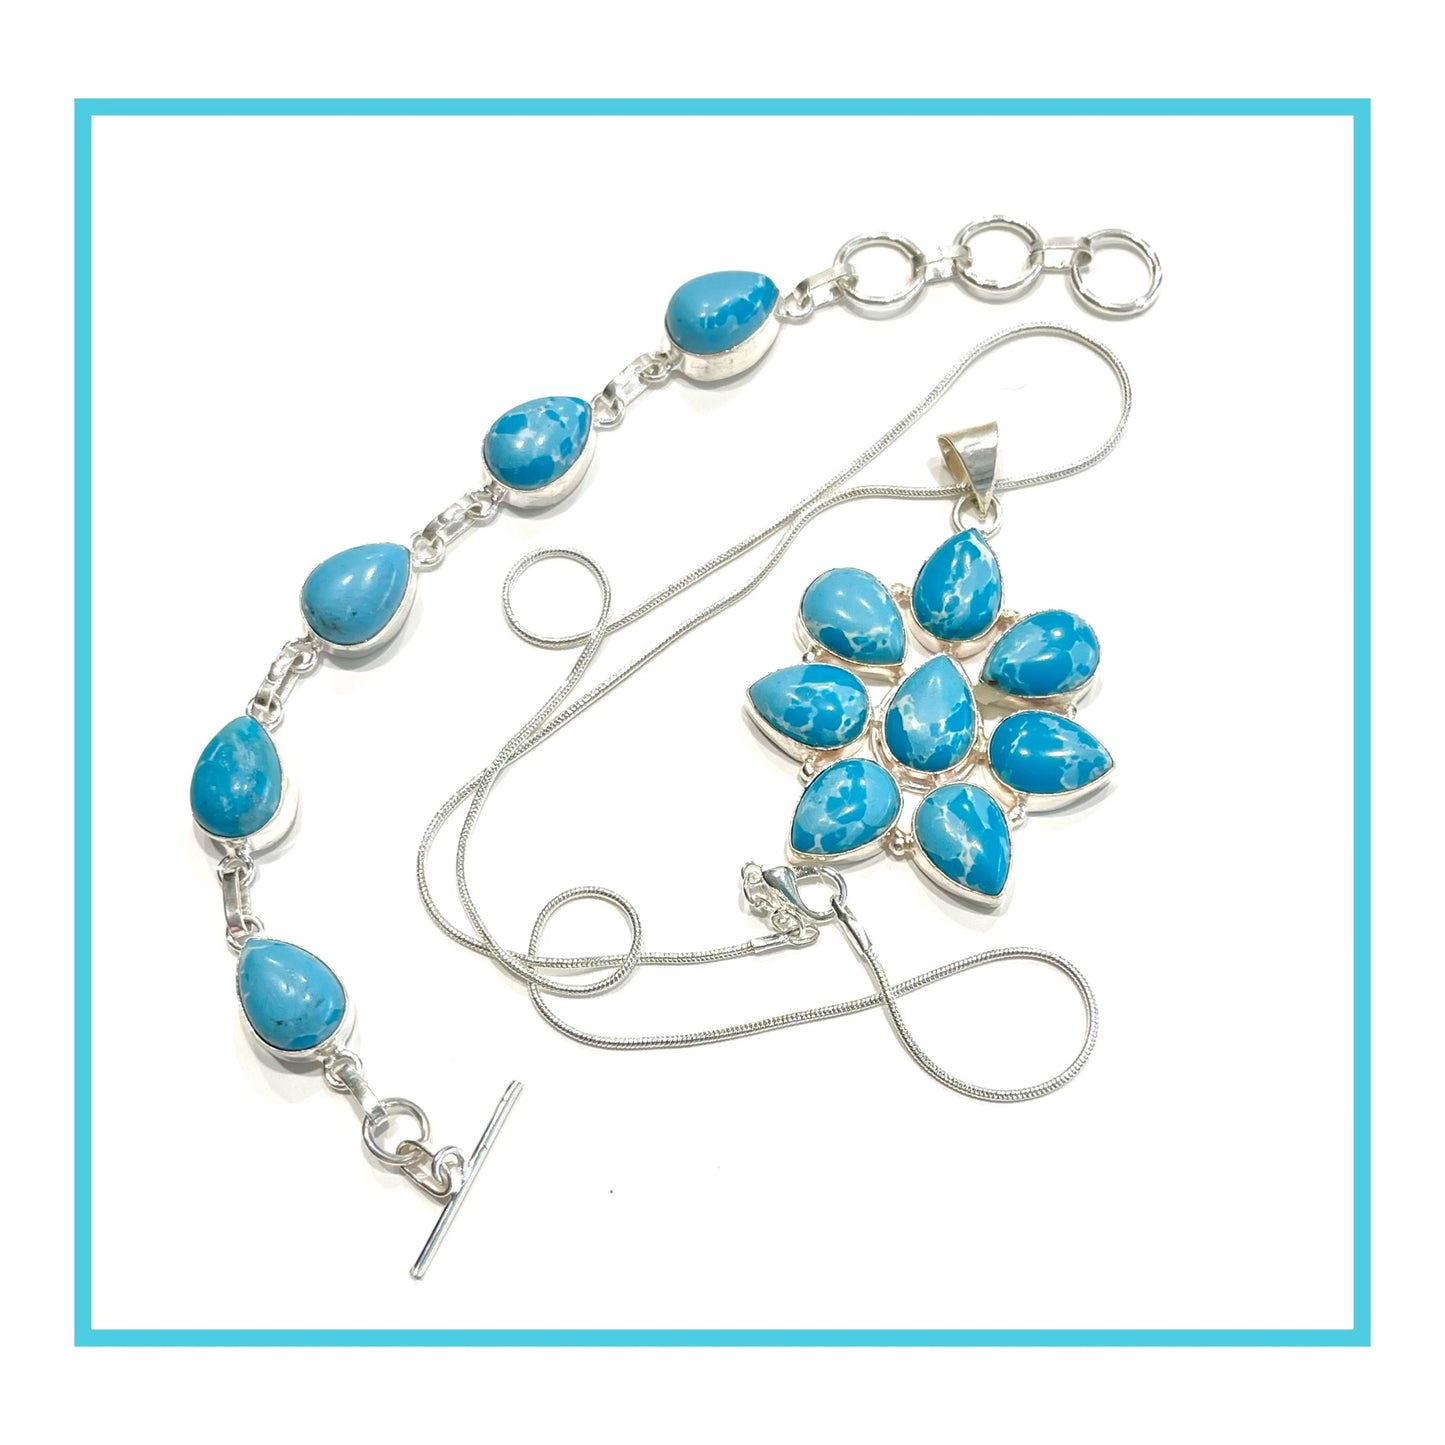 Caribbean Blue Larimar Gemstone Silver Bracelet and Pendant Necklace